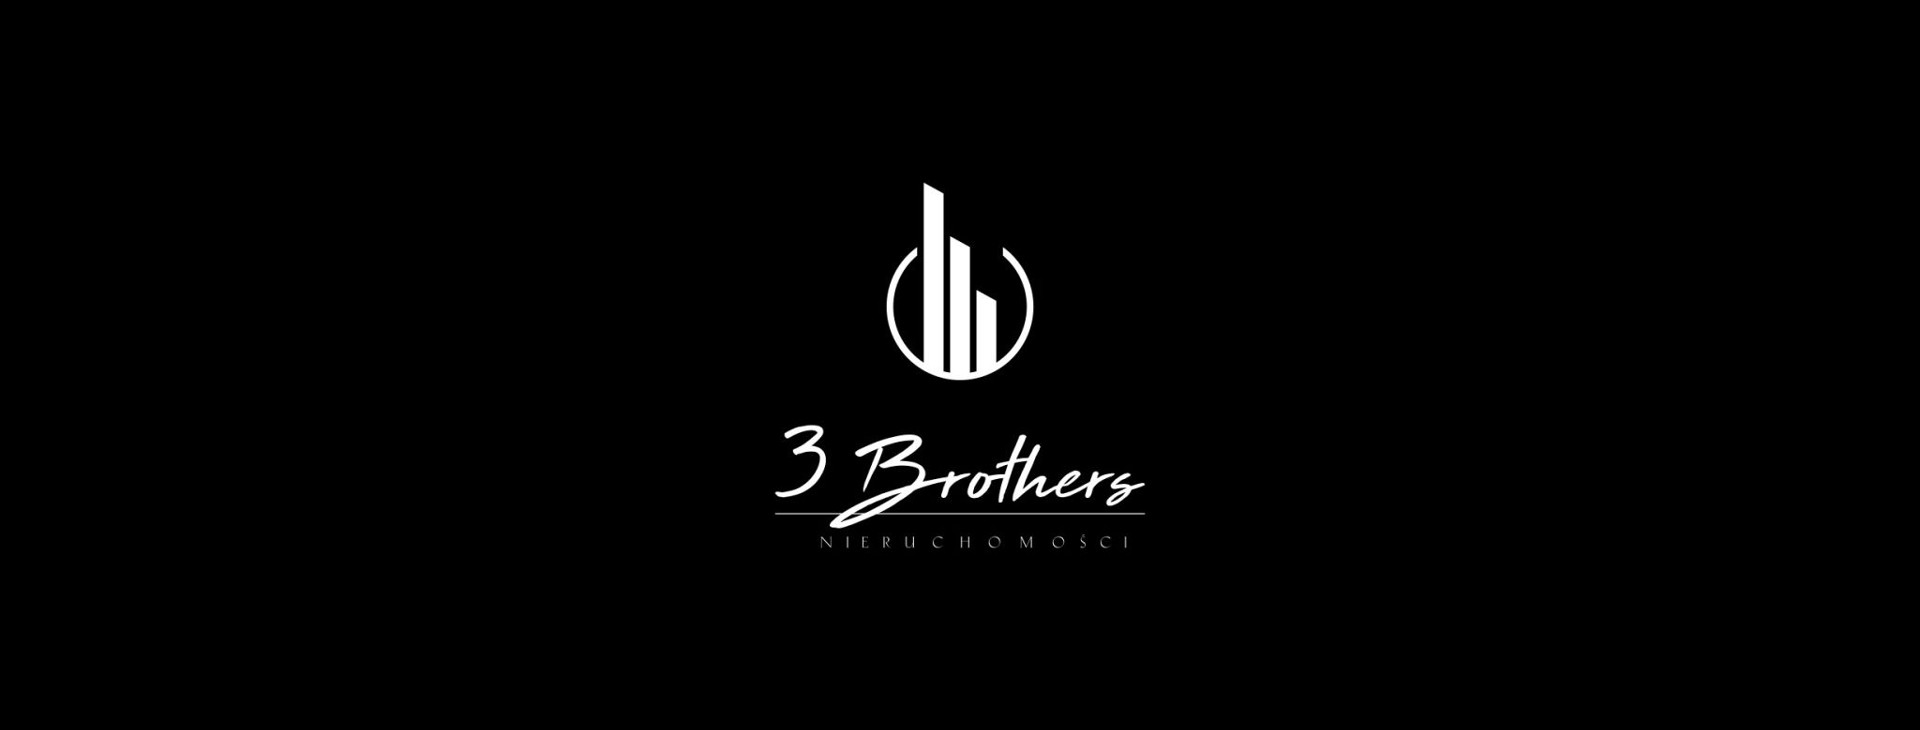 3 Brothers - Nieruchomości